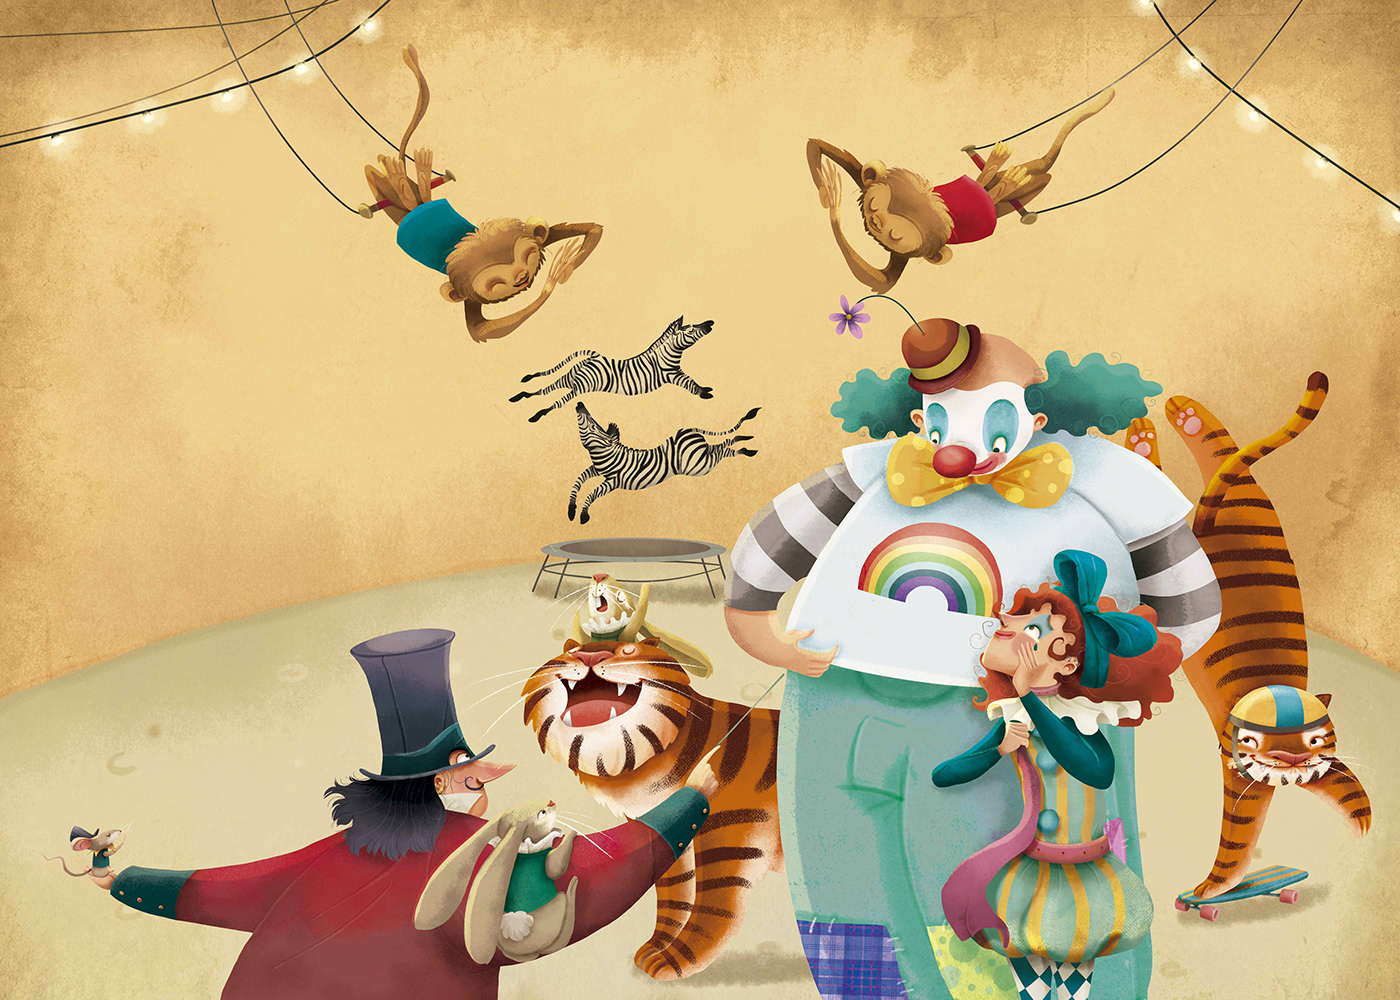 Circus tiger clown children illustration kids illustration teaching englishbook monkey rabbit party ilustraciones para niños